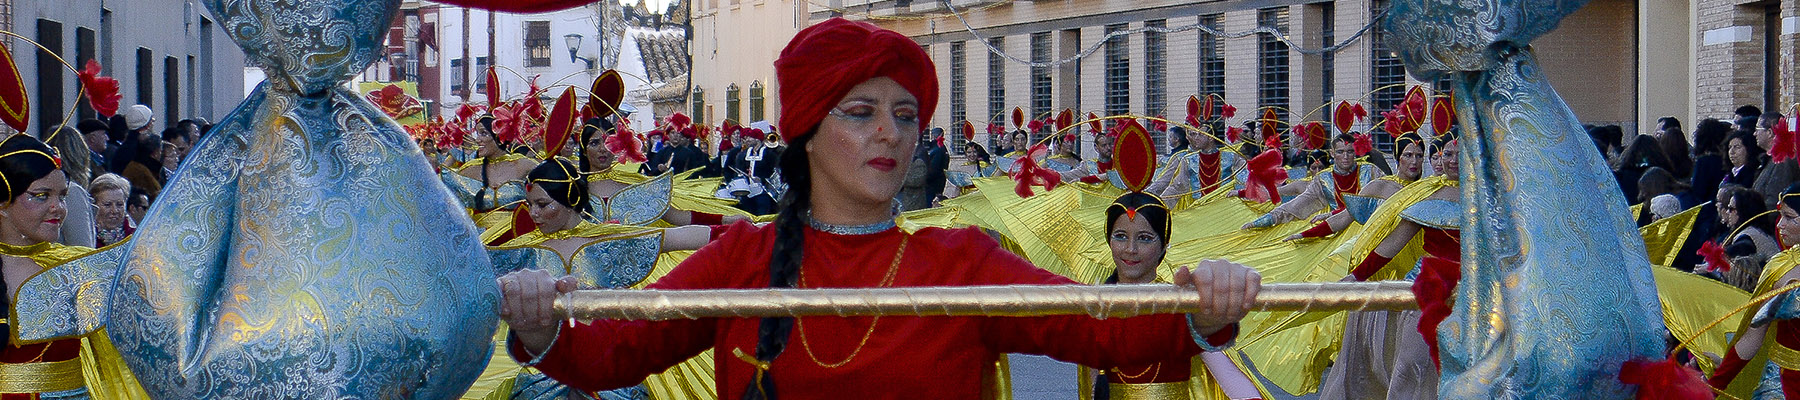 carnival-miguelturra-parade-floats-2015